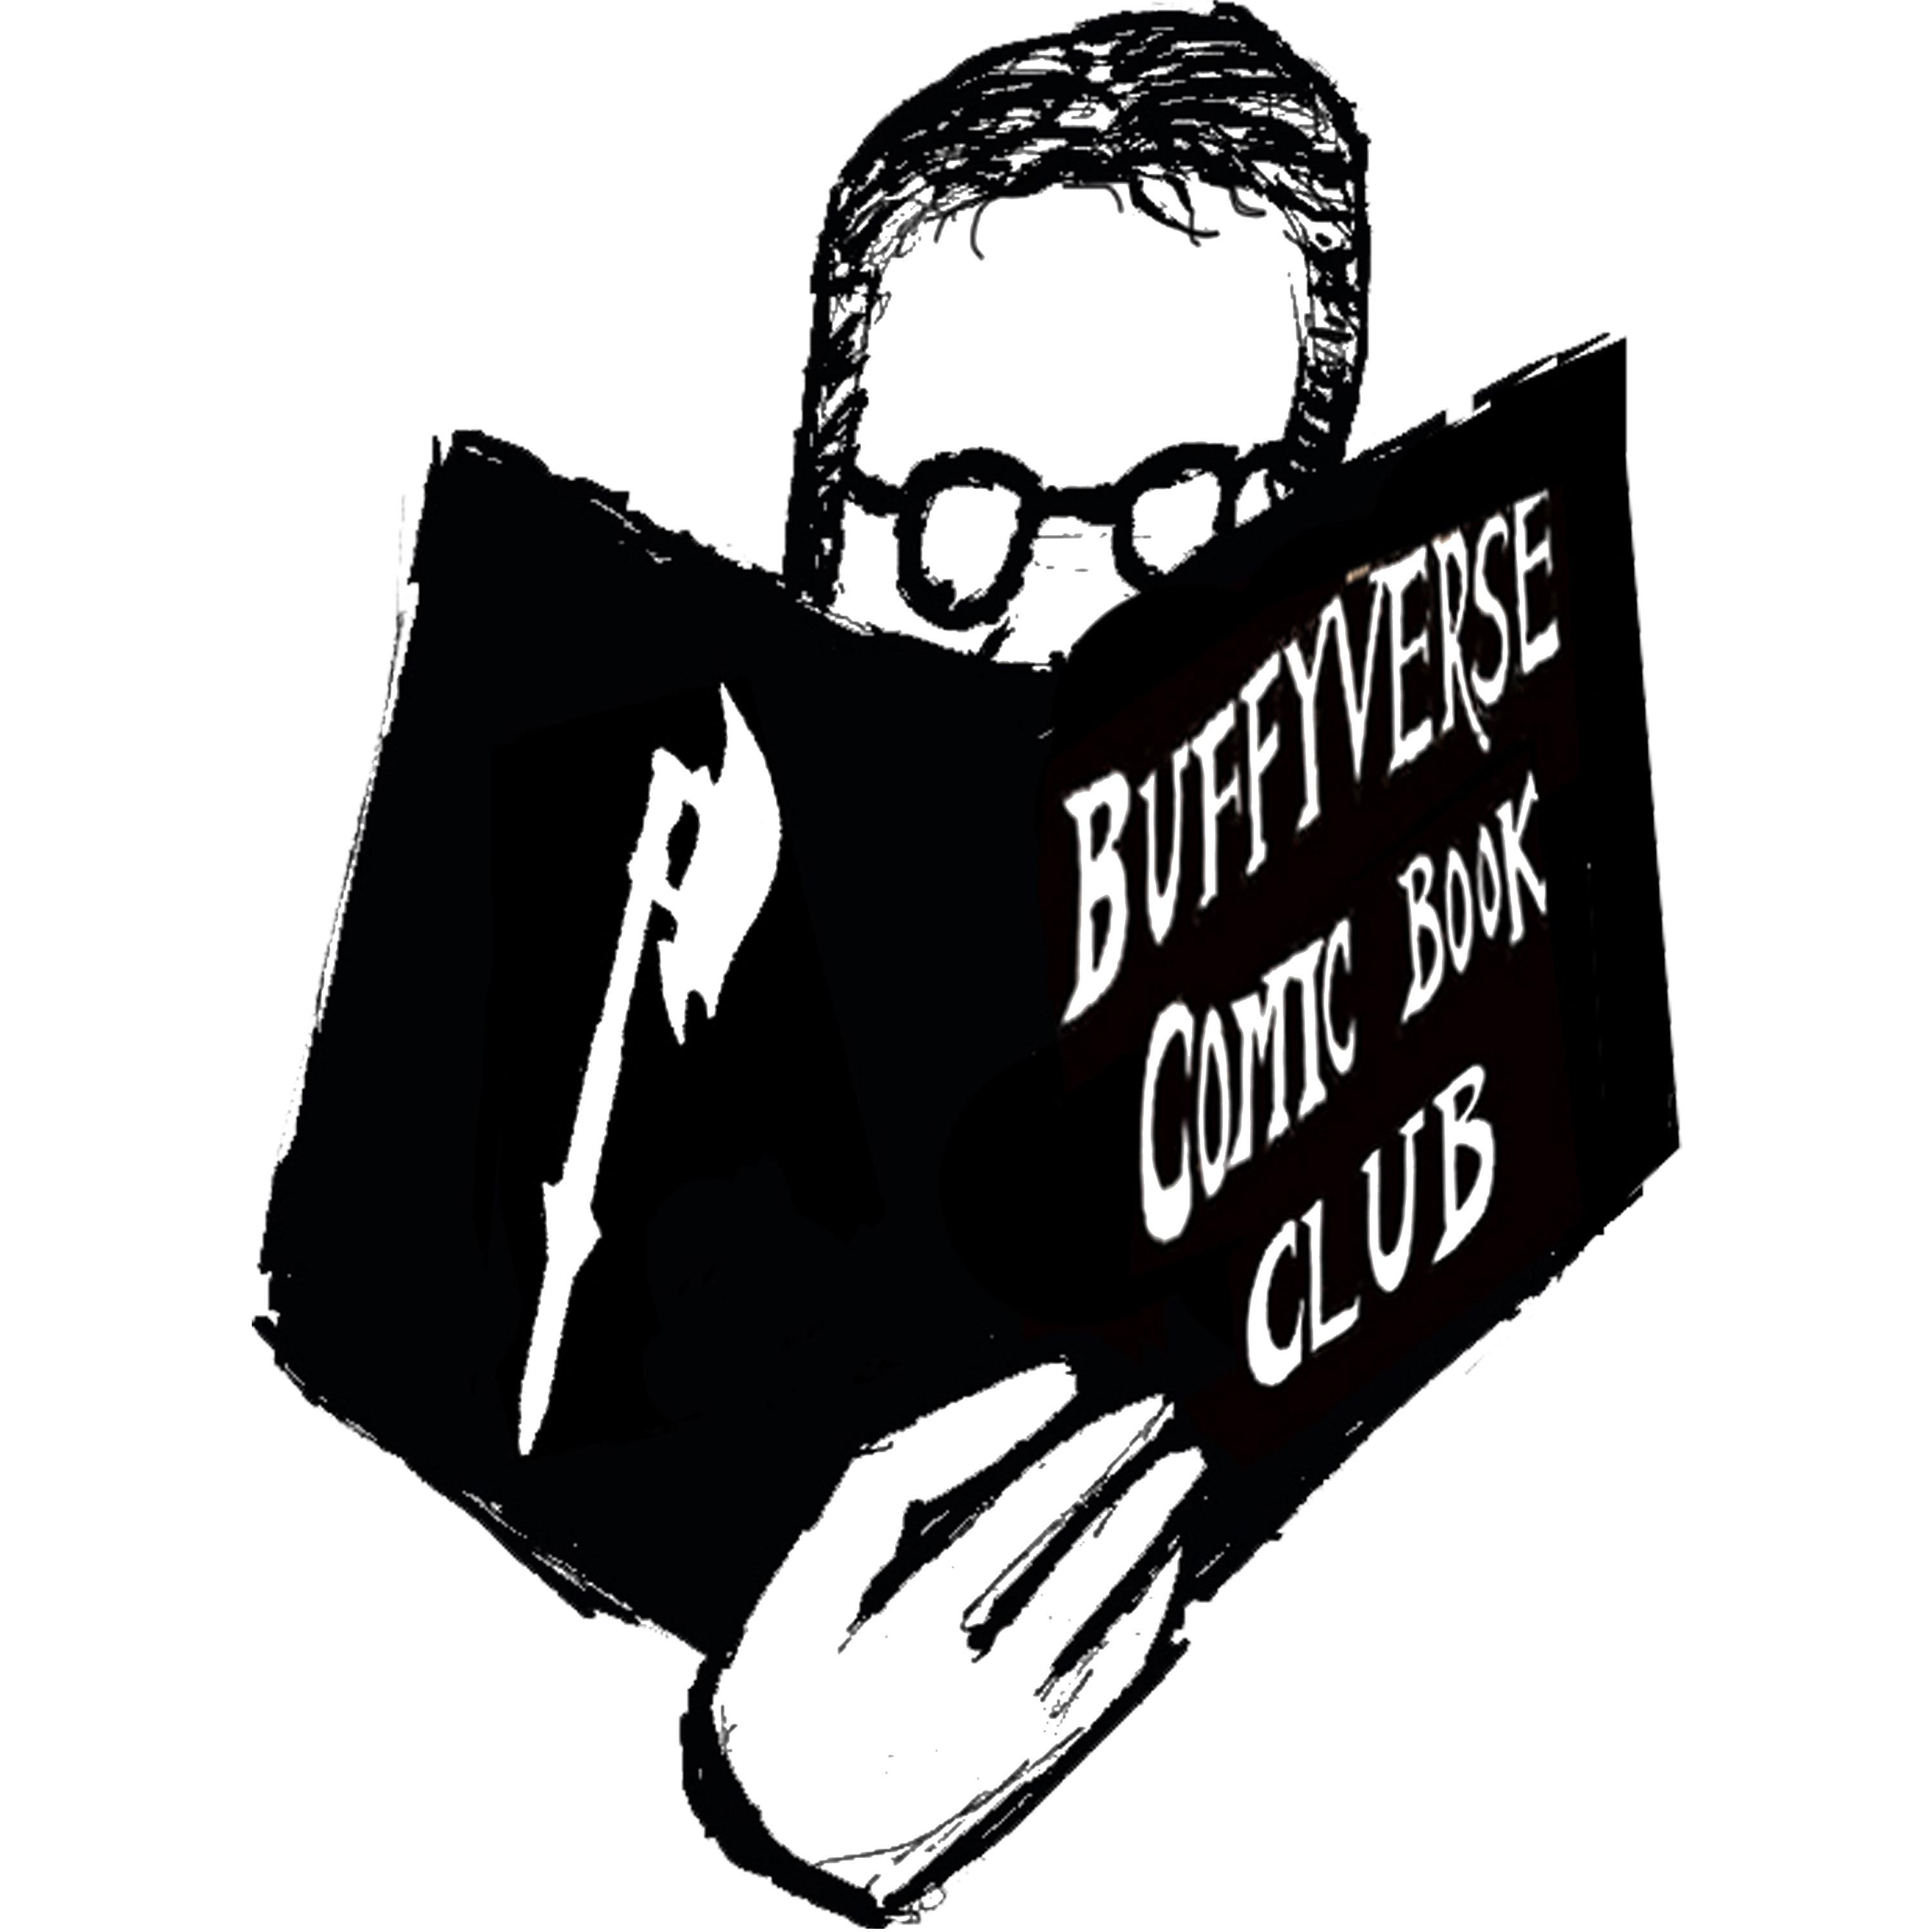 Buffyverse Comic Book Club